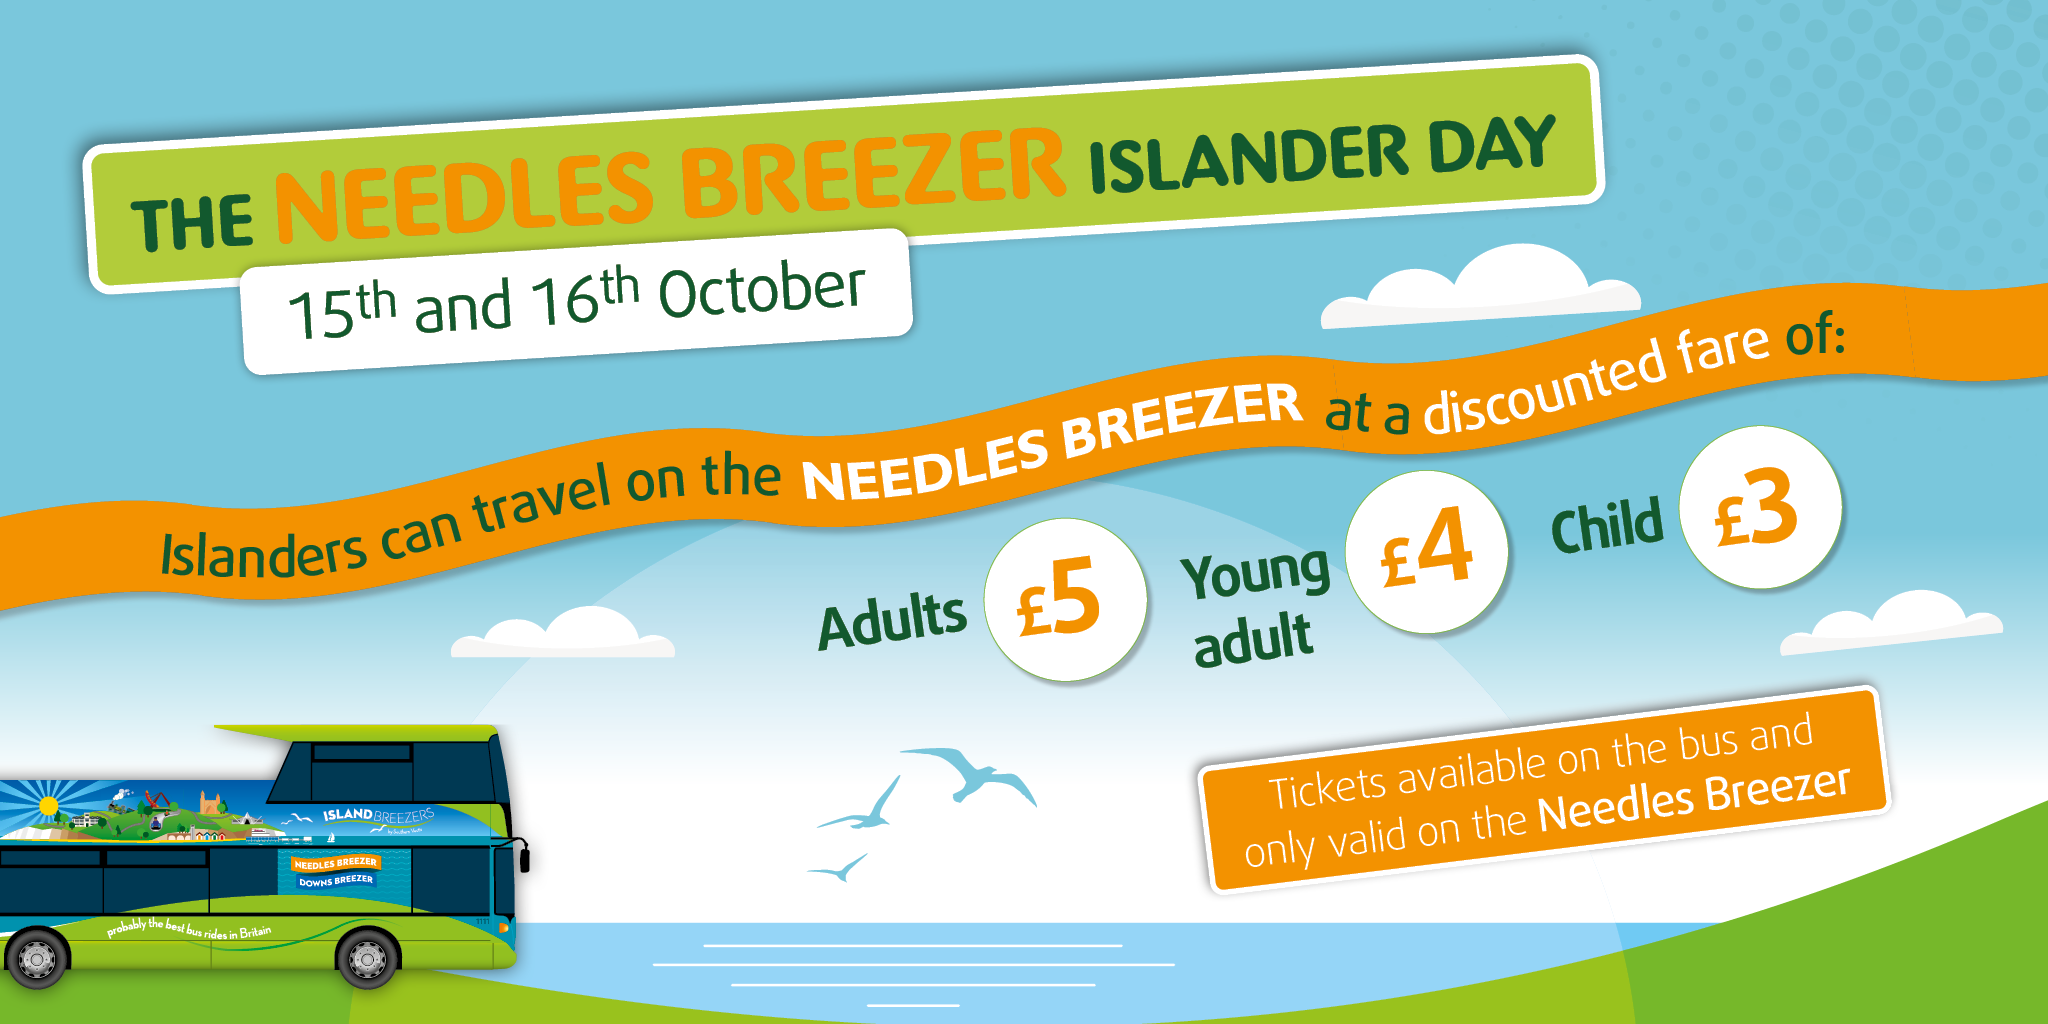 Needles Breezer Islander Day 